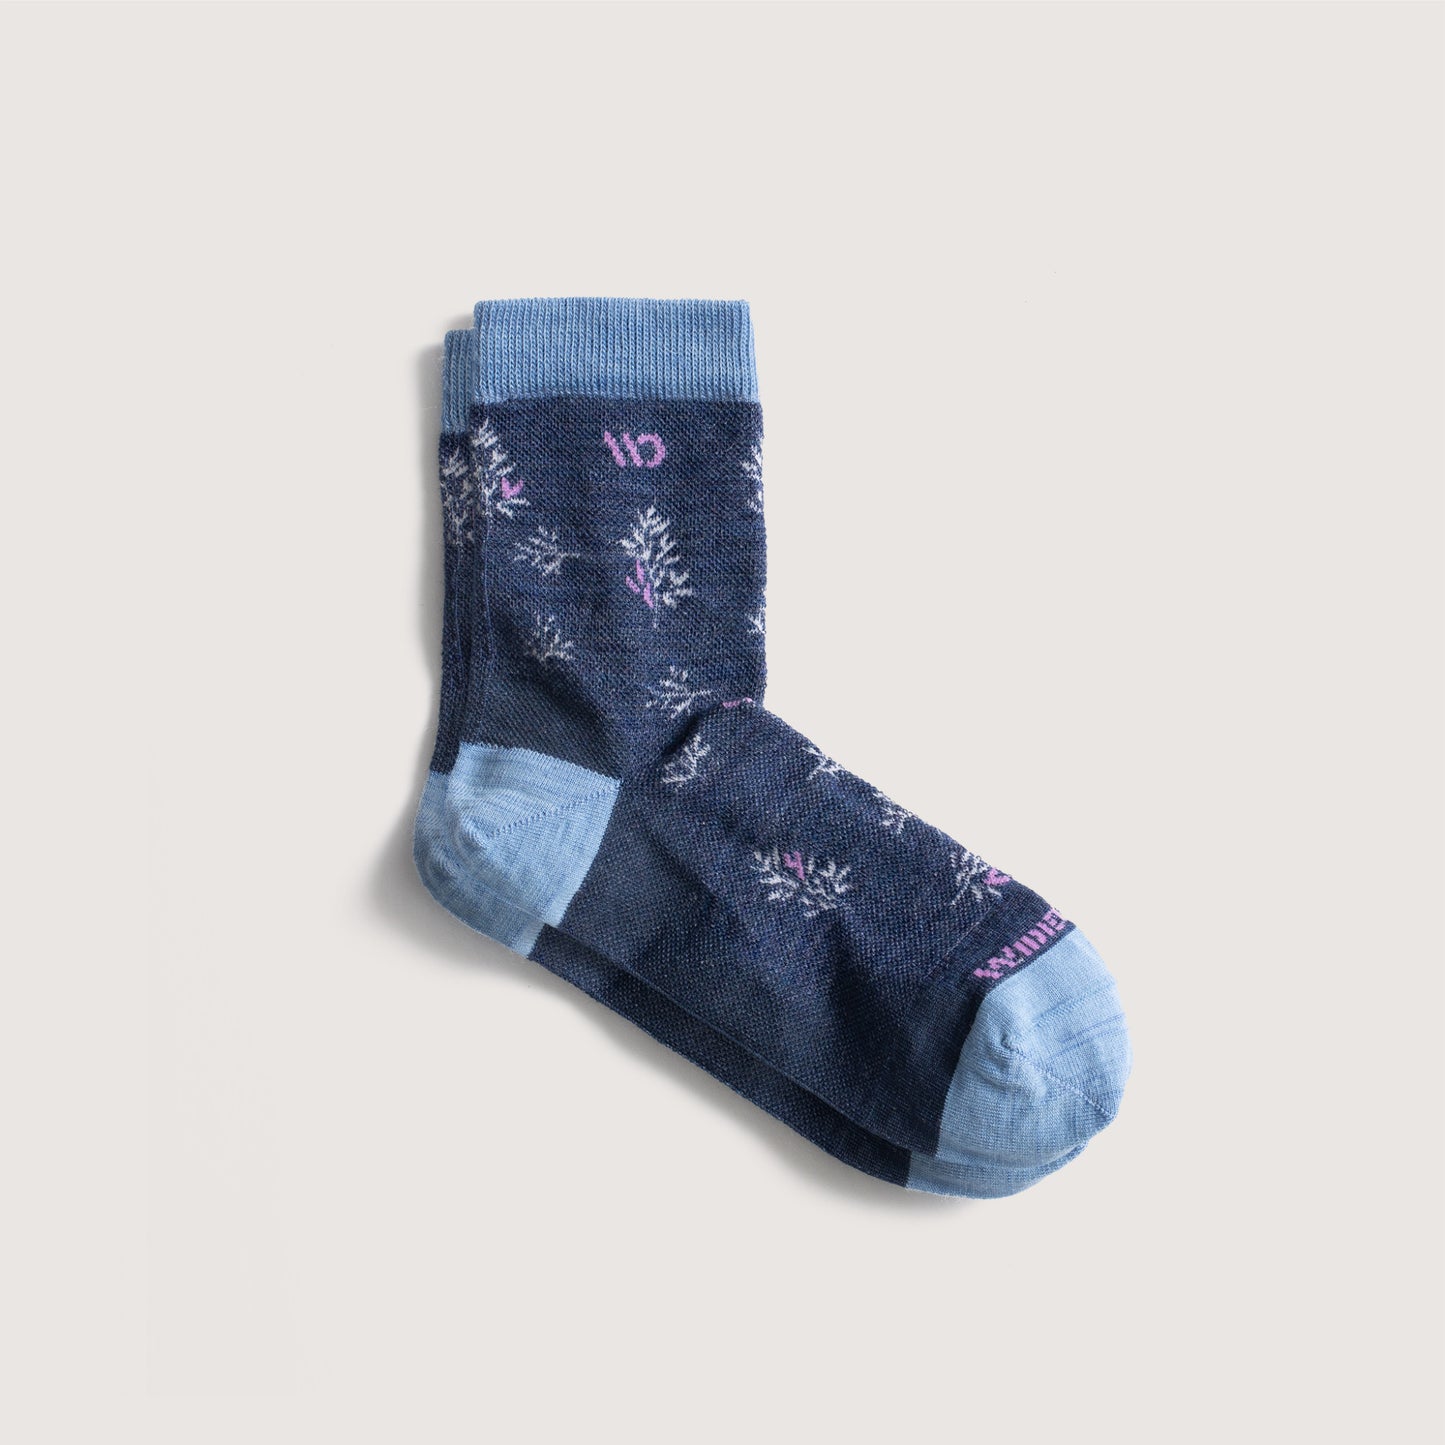 Flat socks, featuring light blue heel/toe, denim body, lavender logo and white detail --Denim